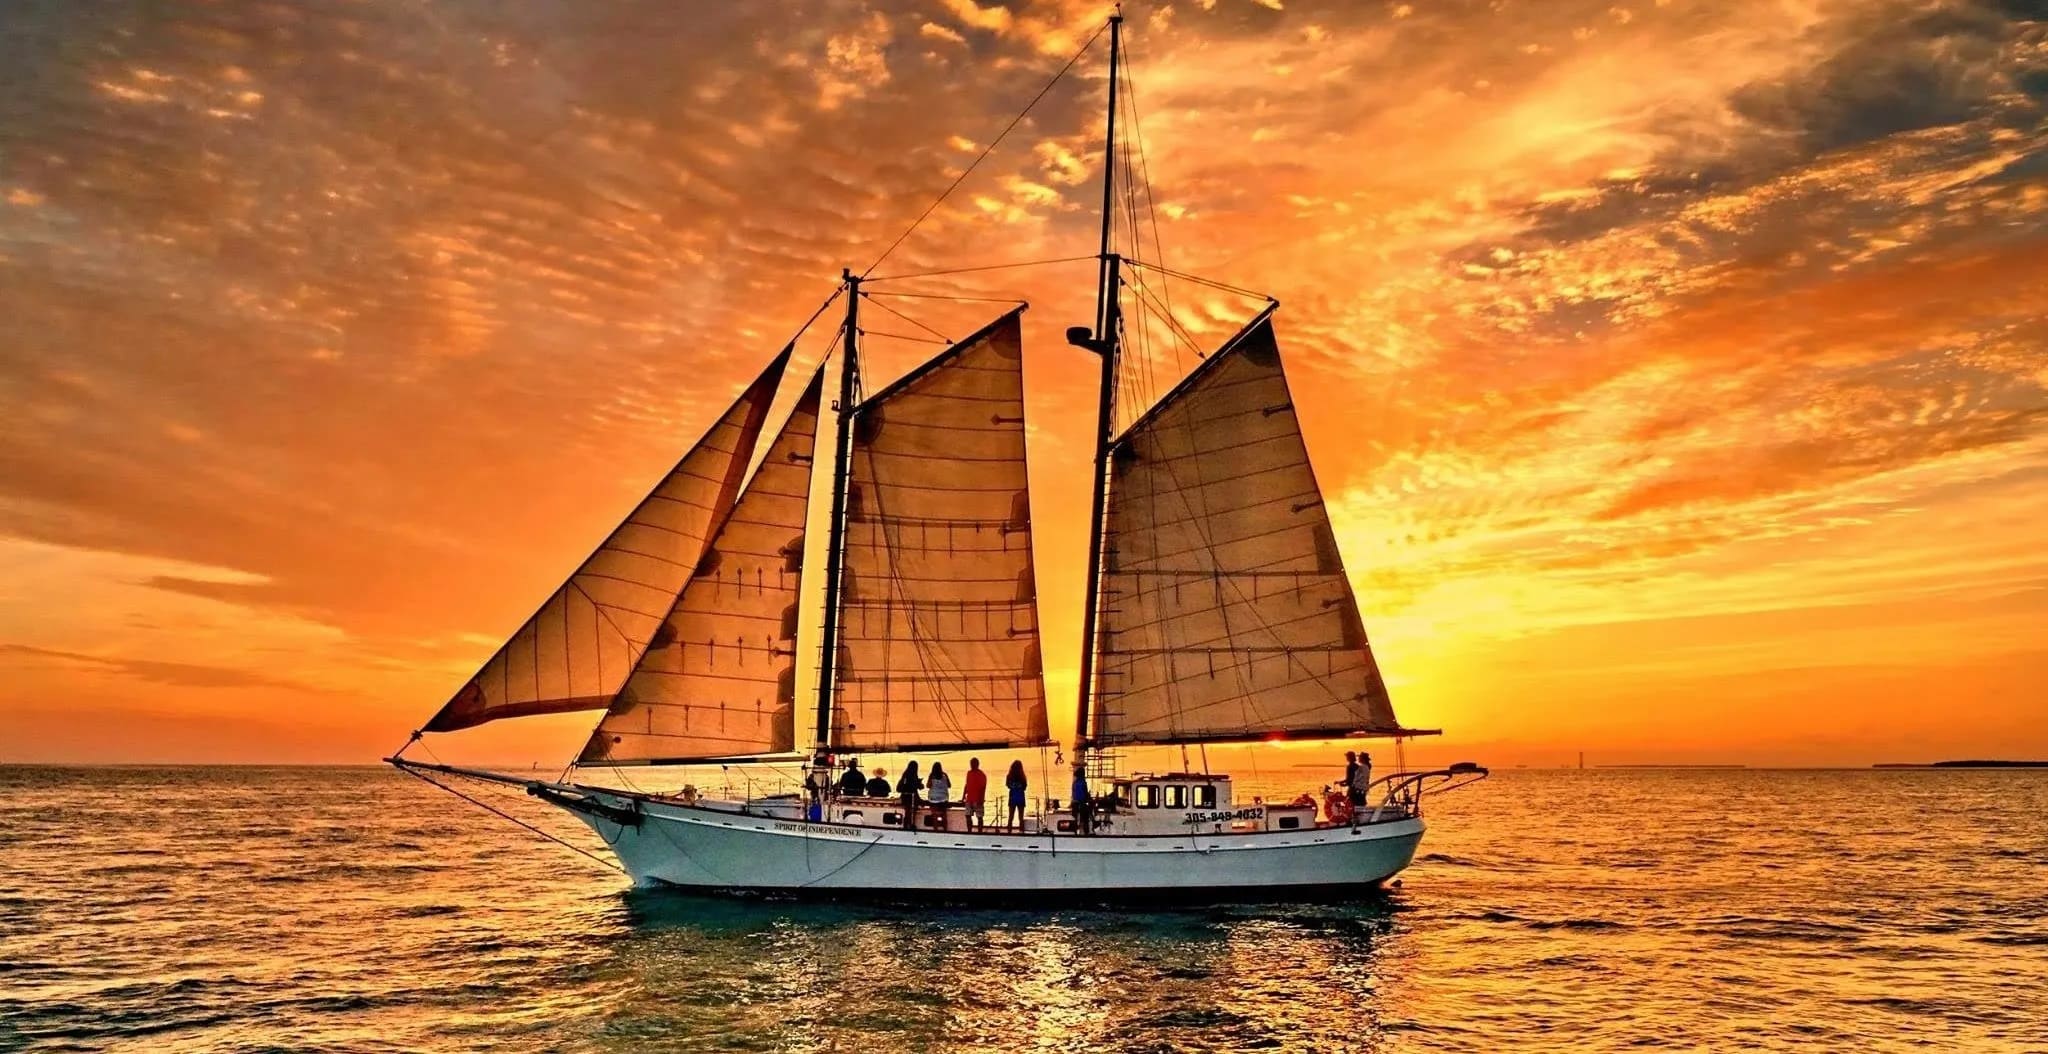 schooner spirit of independence sunset sail photo.